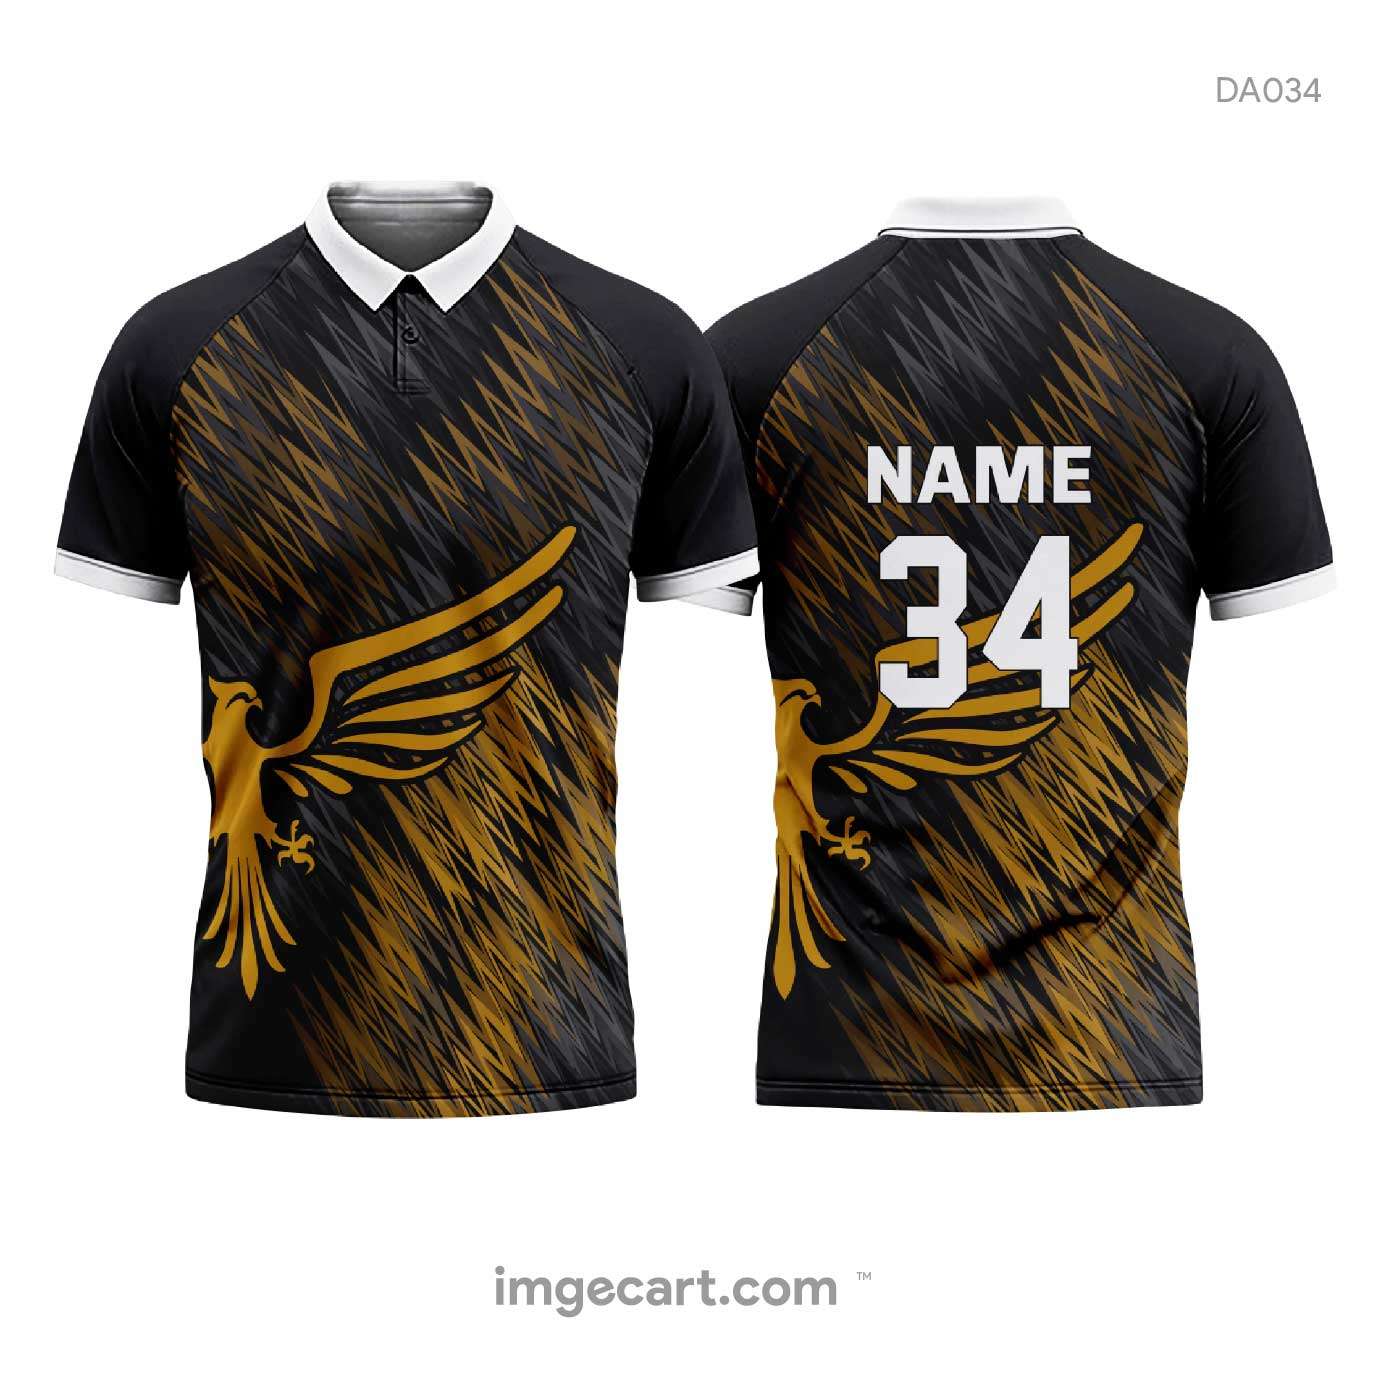 Football Jersey Design Black with gold brush effect - imgecart